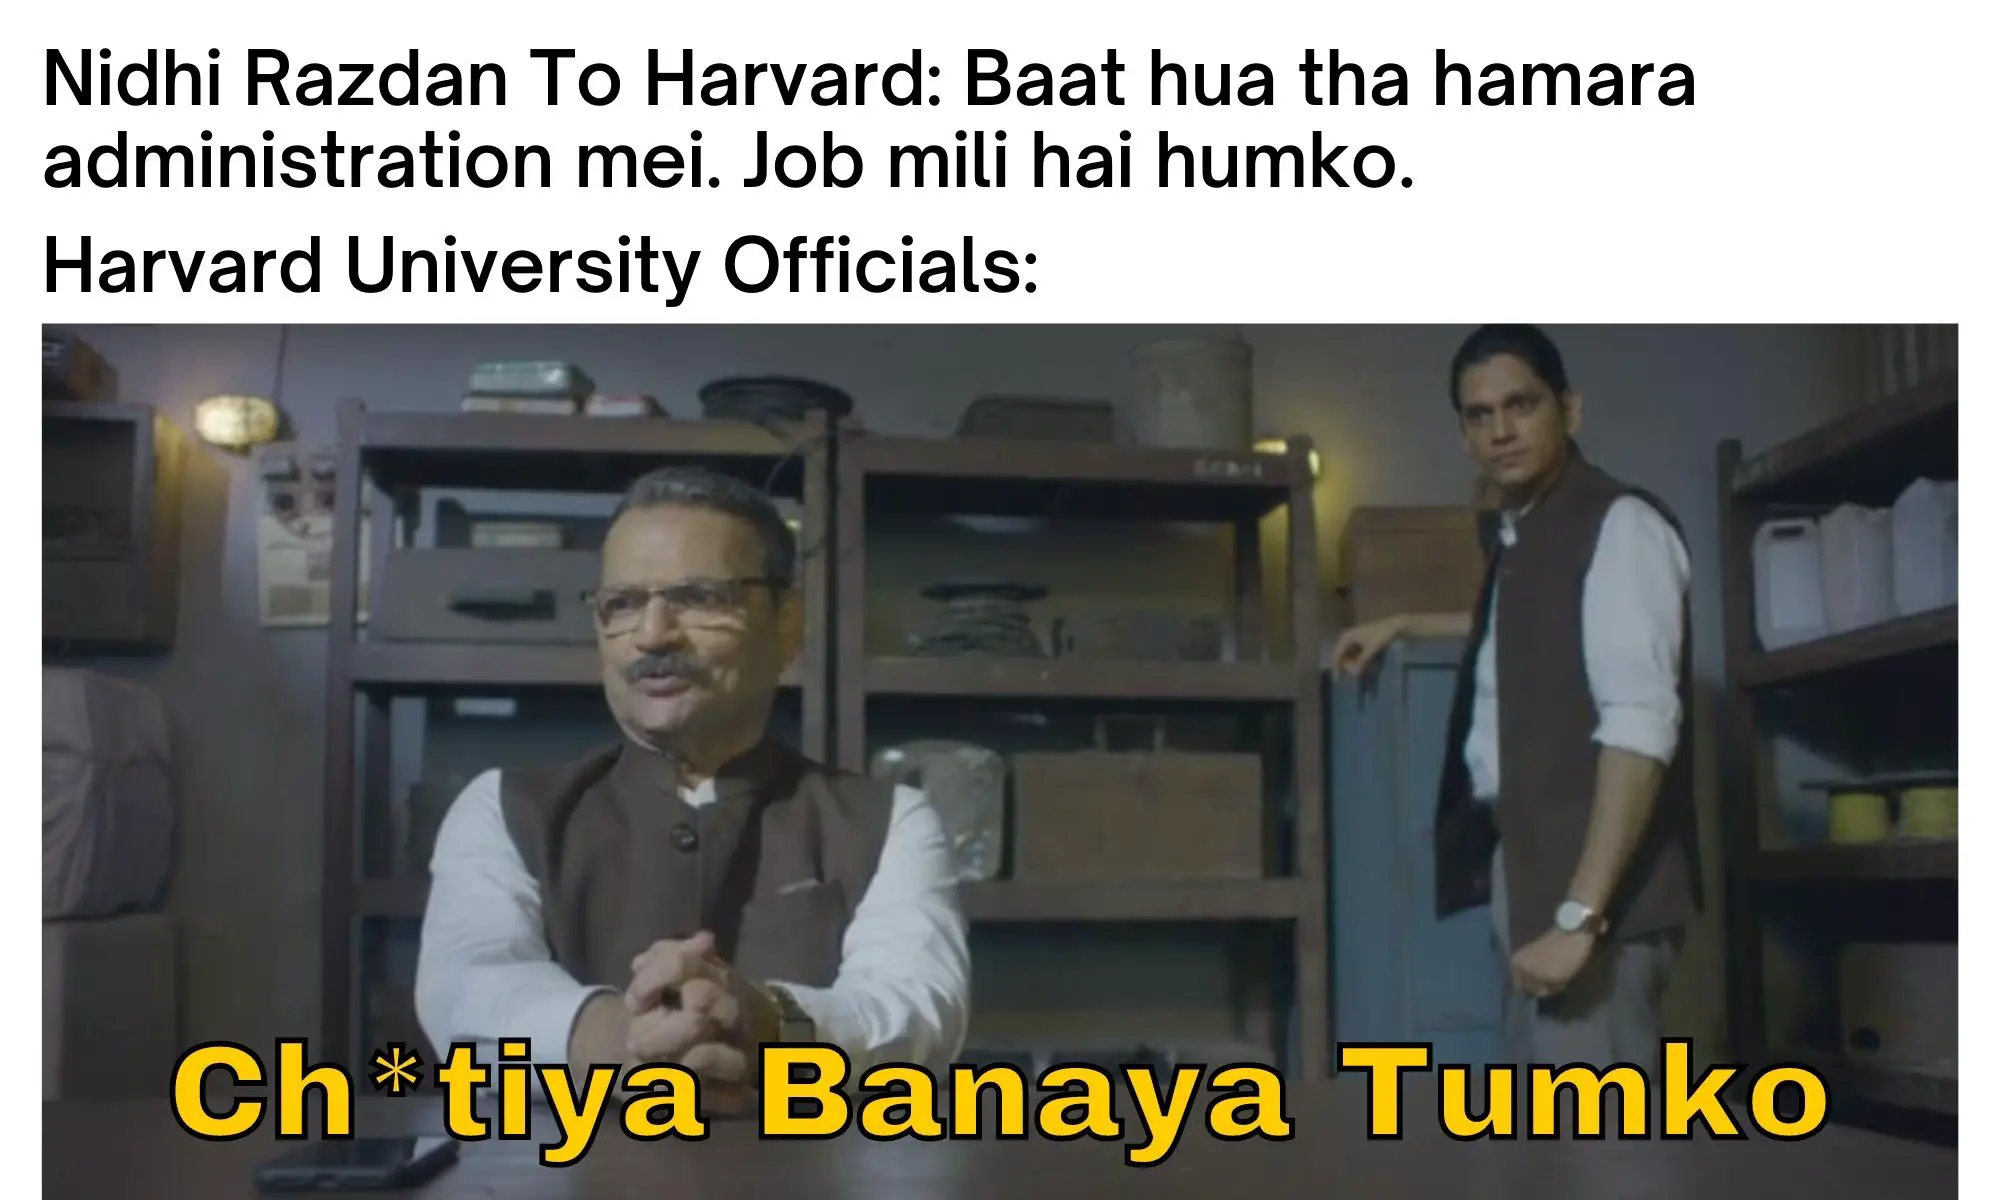 Nidhi Razdan meme on Harvard University